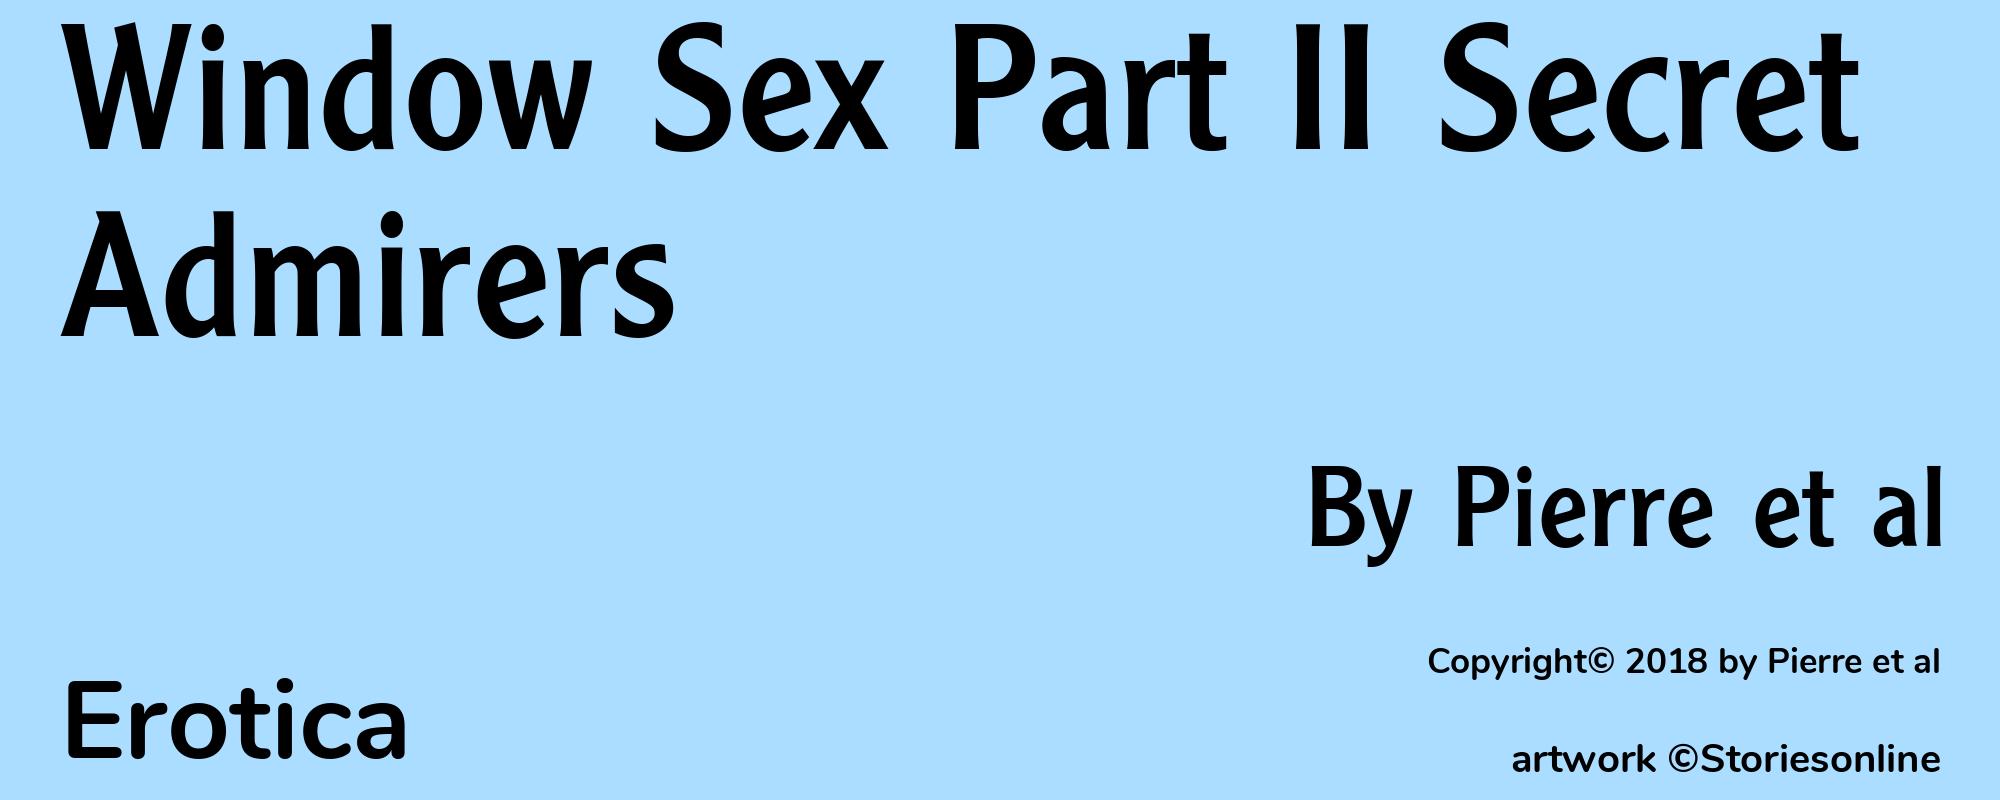 Window Sex Part II Secret Admirers - Cover